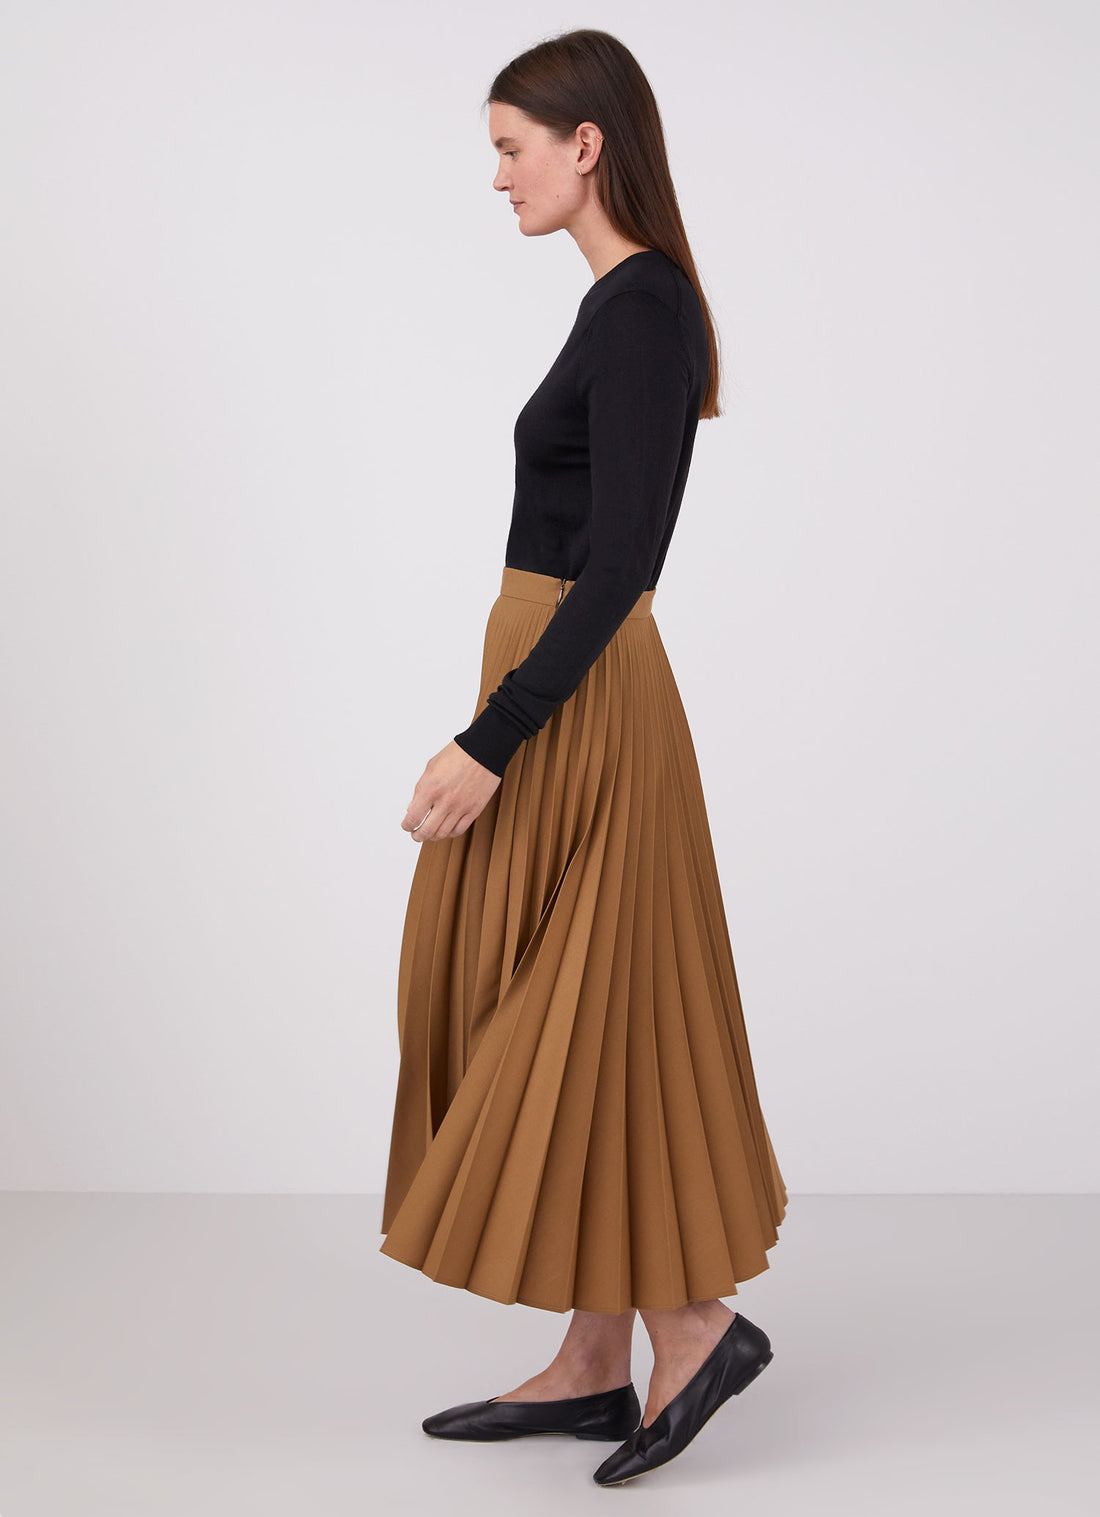 Women's Pleated Skirt in Dark Tan